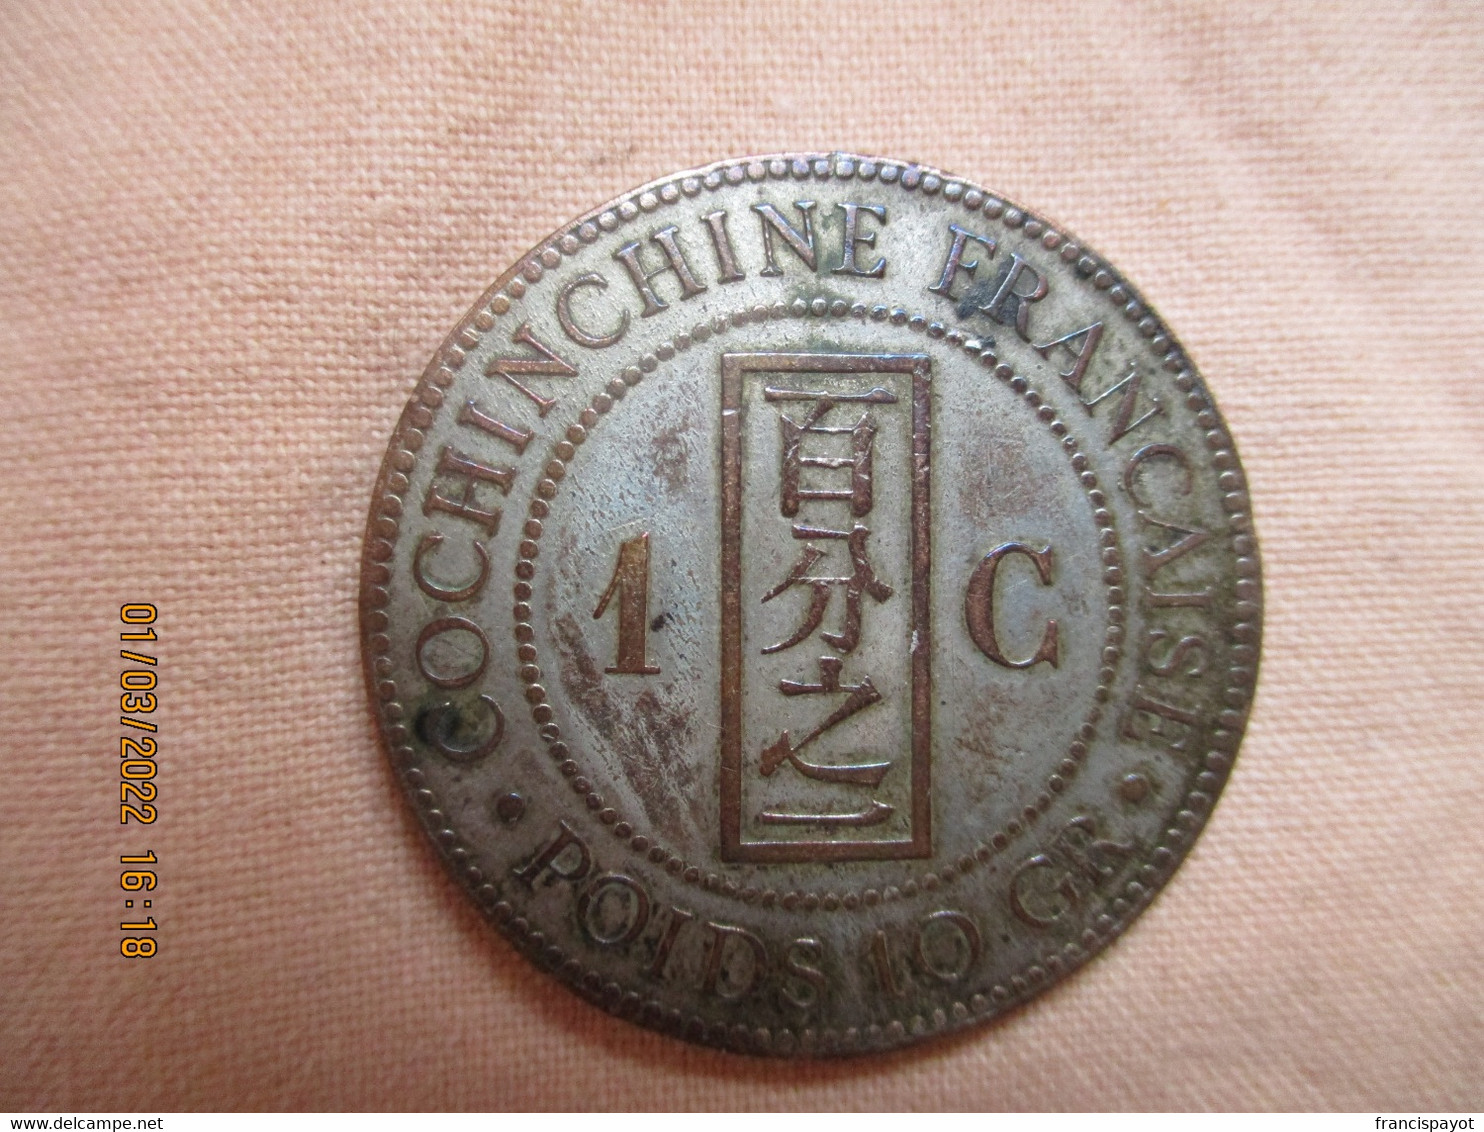 Indochine: 1 Centime 1879 - French Indochina